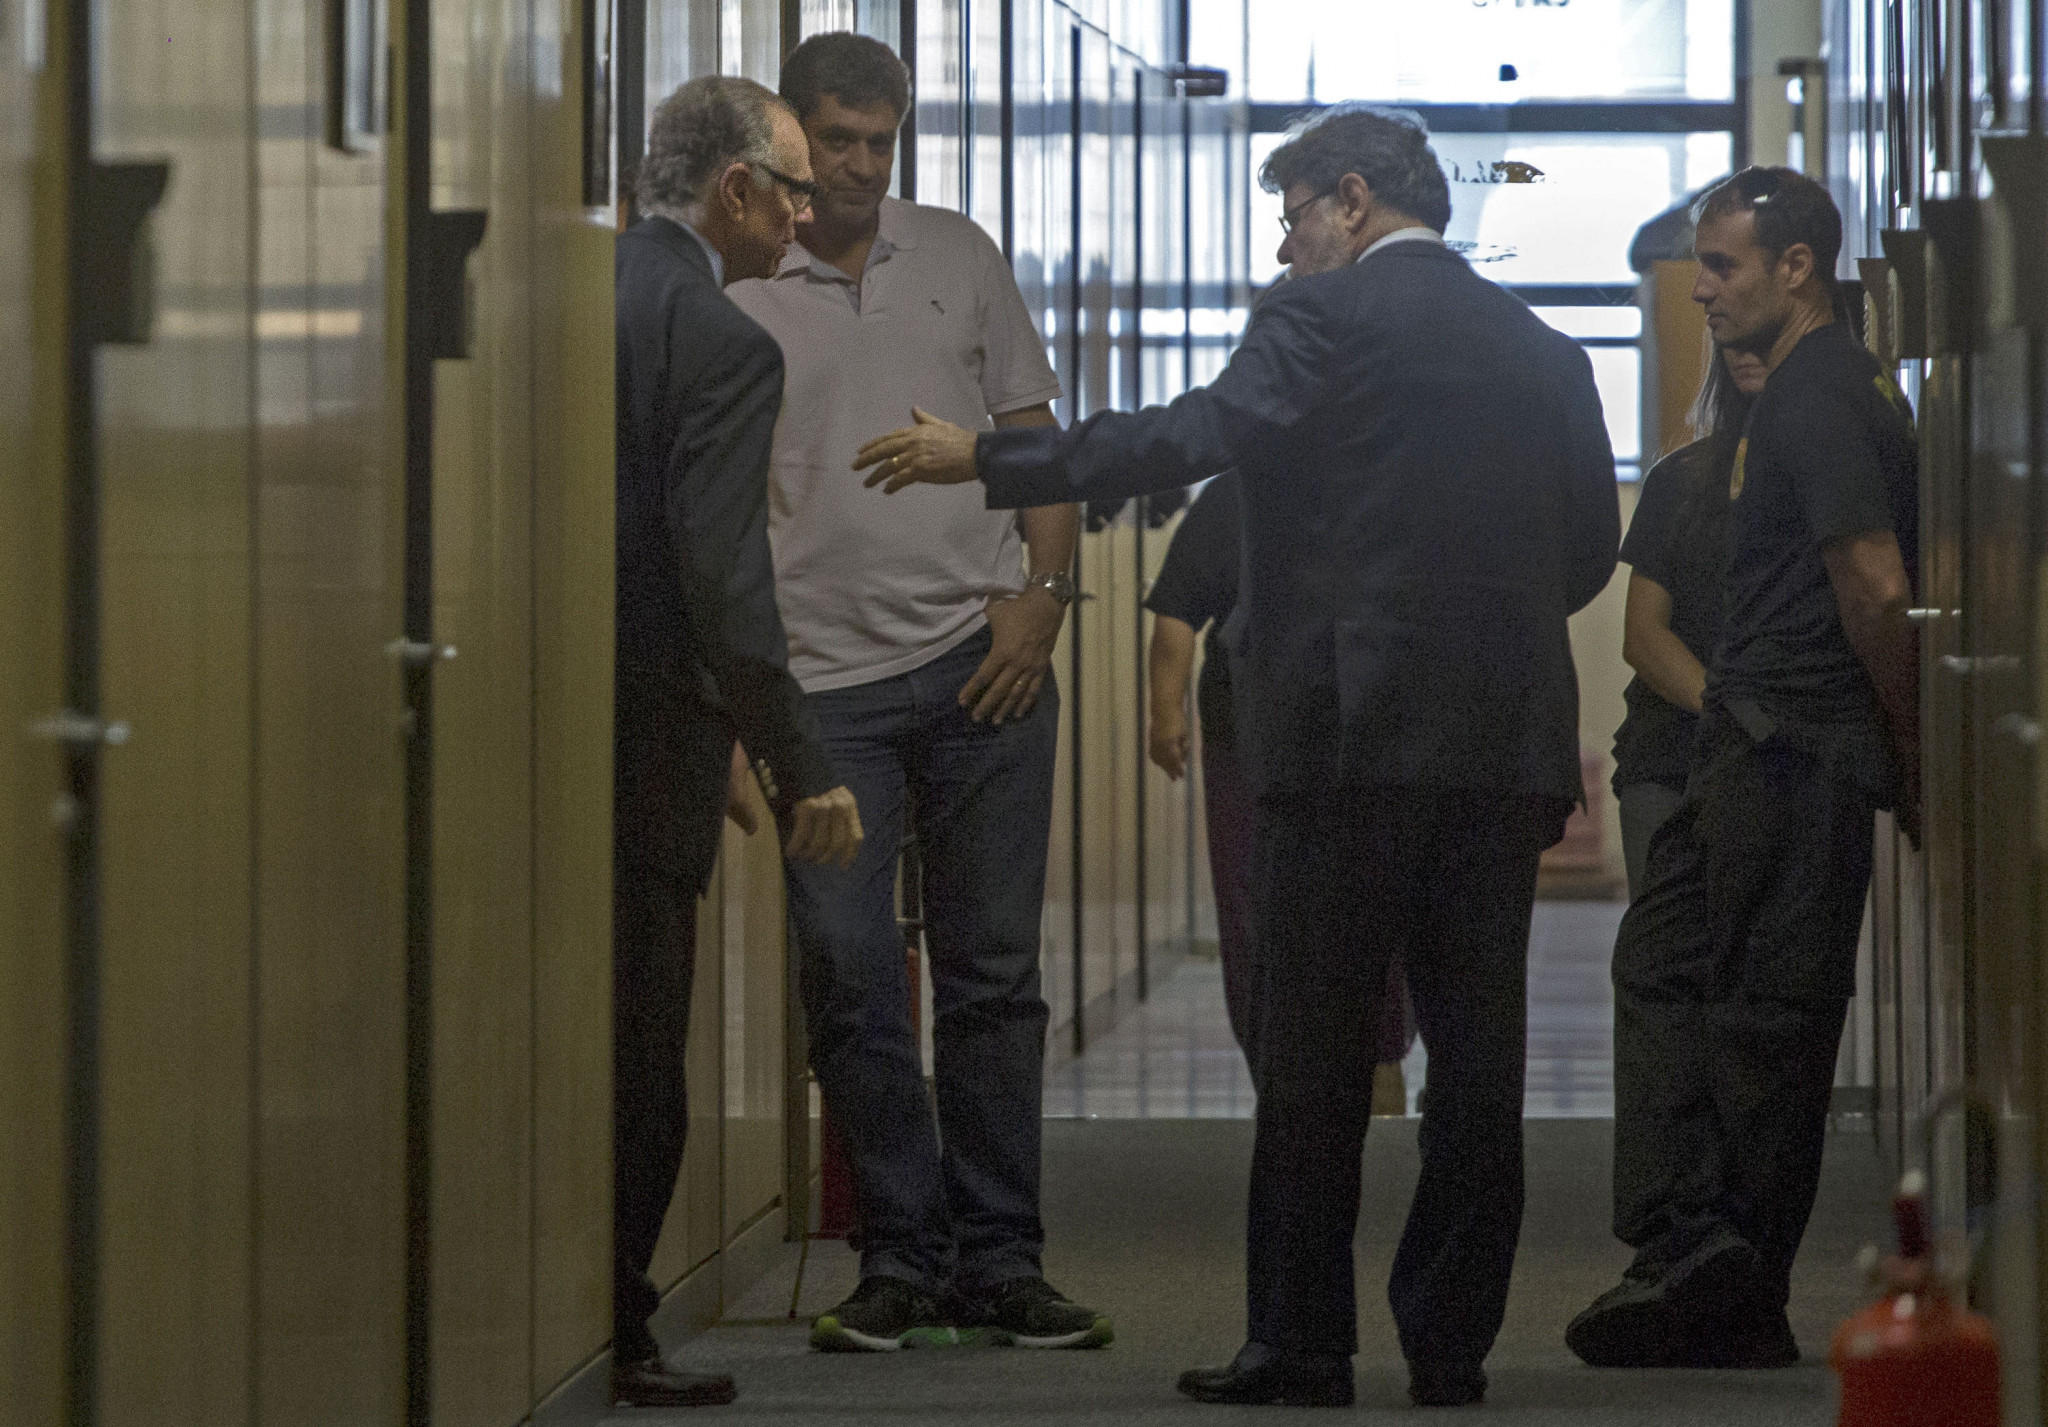 Carlos Nuzman remains in preventative custody ©Getty Images 